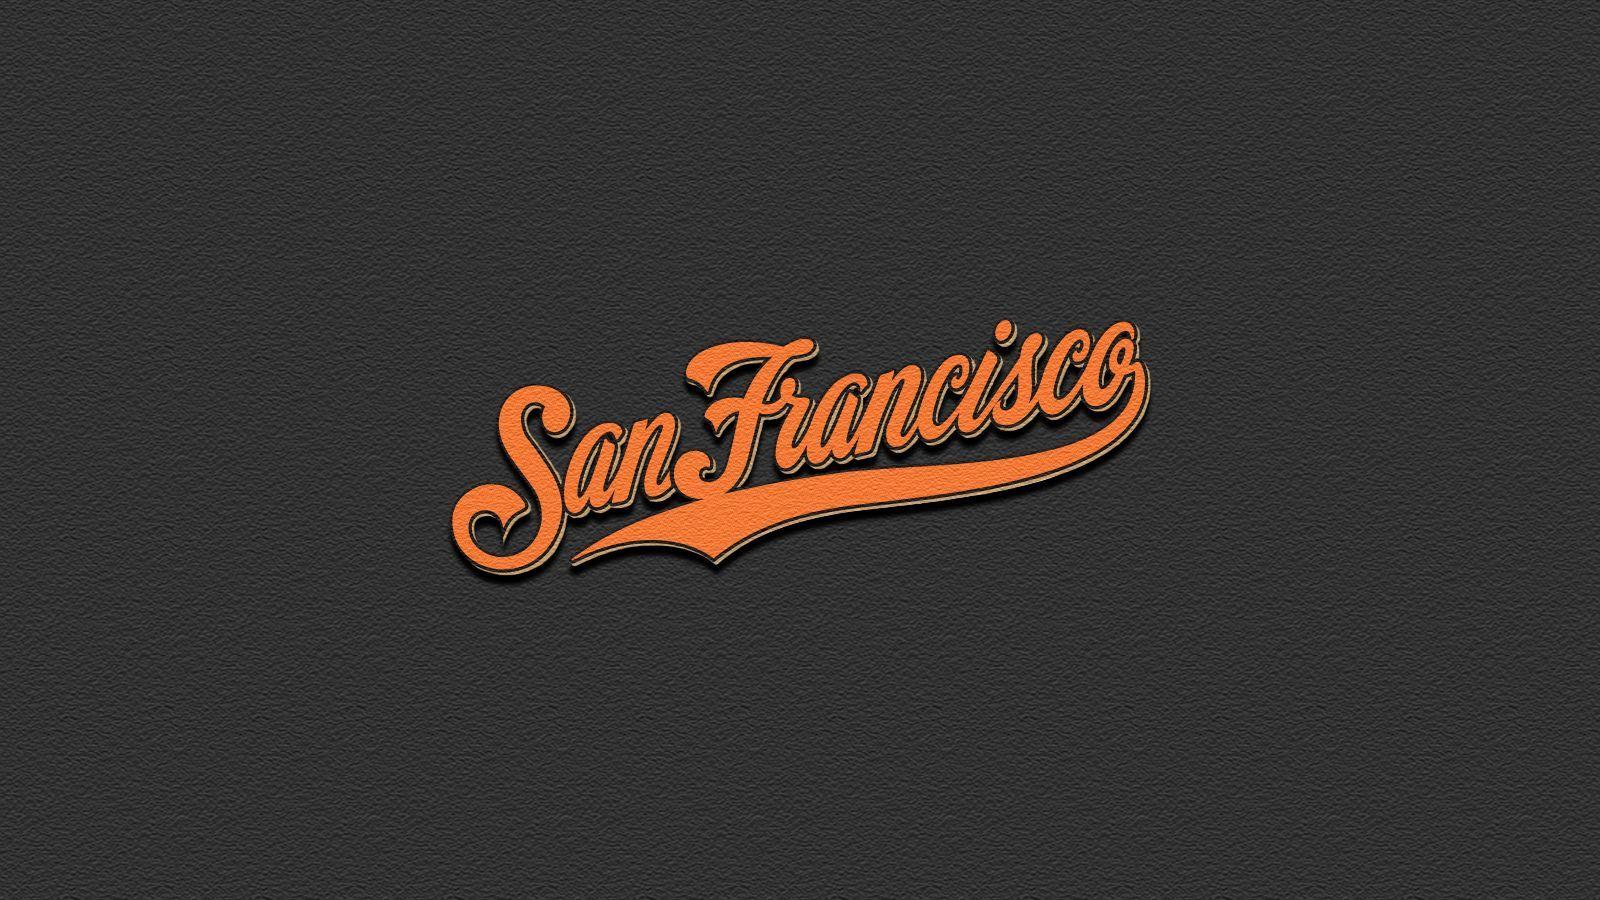 Sports San Francisco Giants 4k Ultra HD Wallpaper